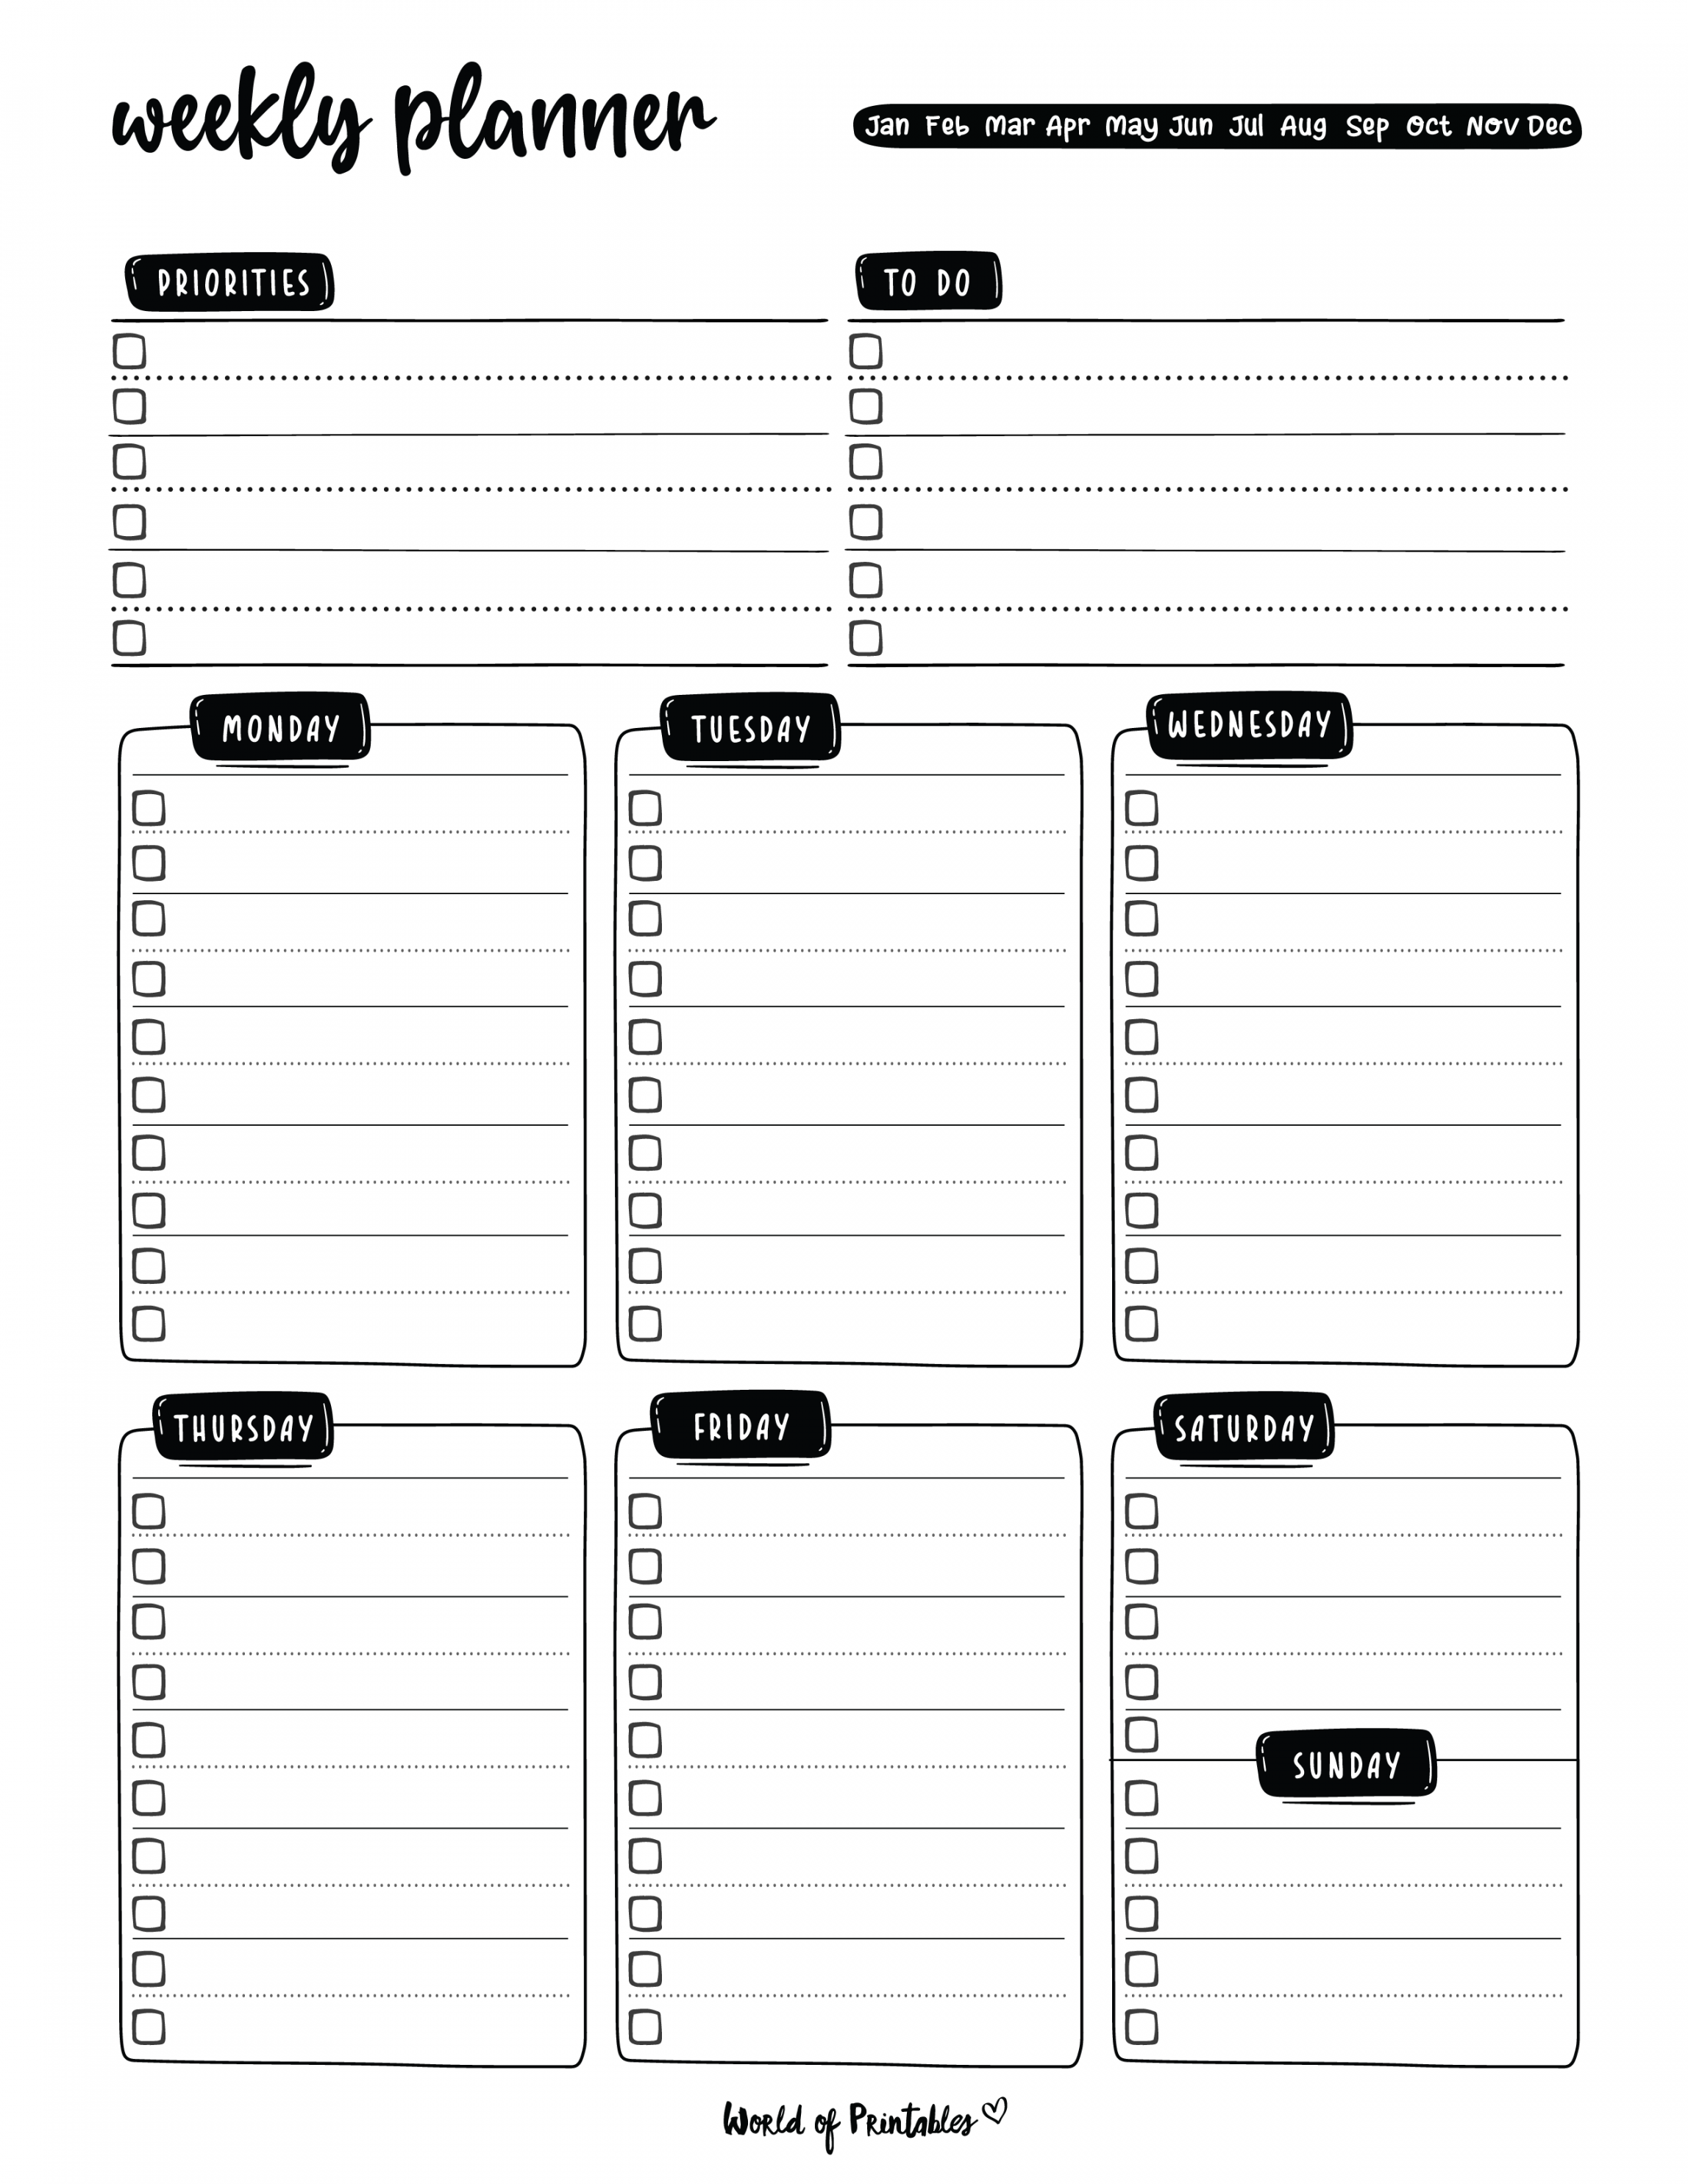 Free Printable Weekly Planner - Printable - Weekly Planner Templates - World of Printables